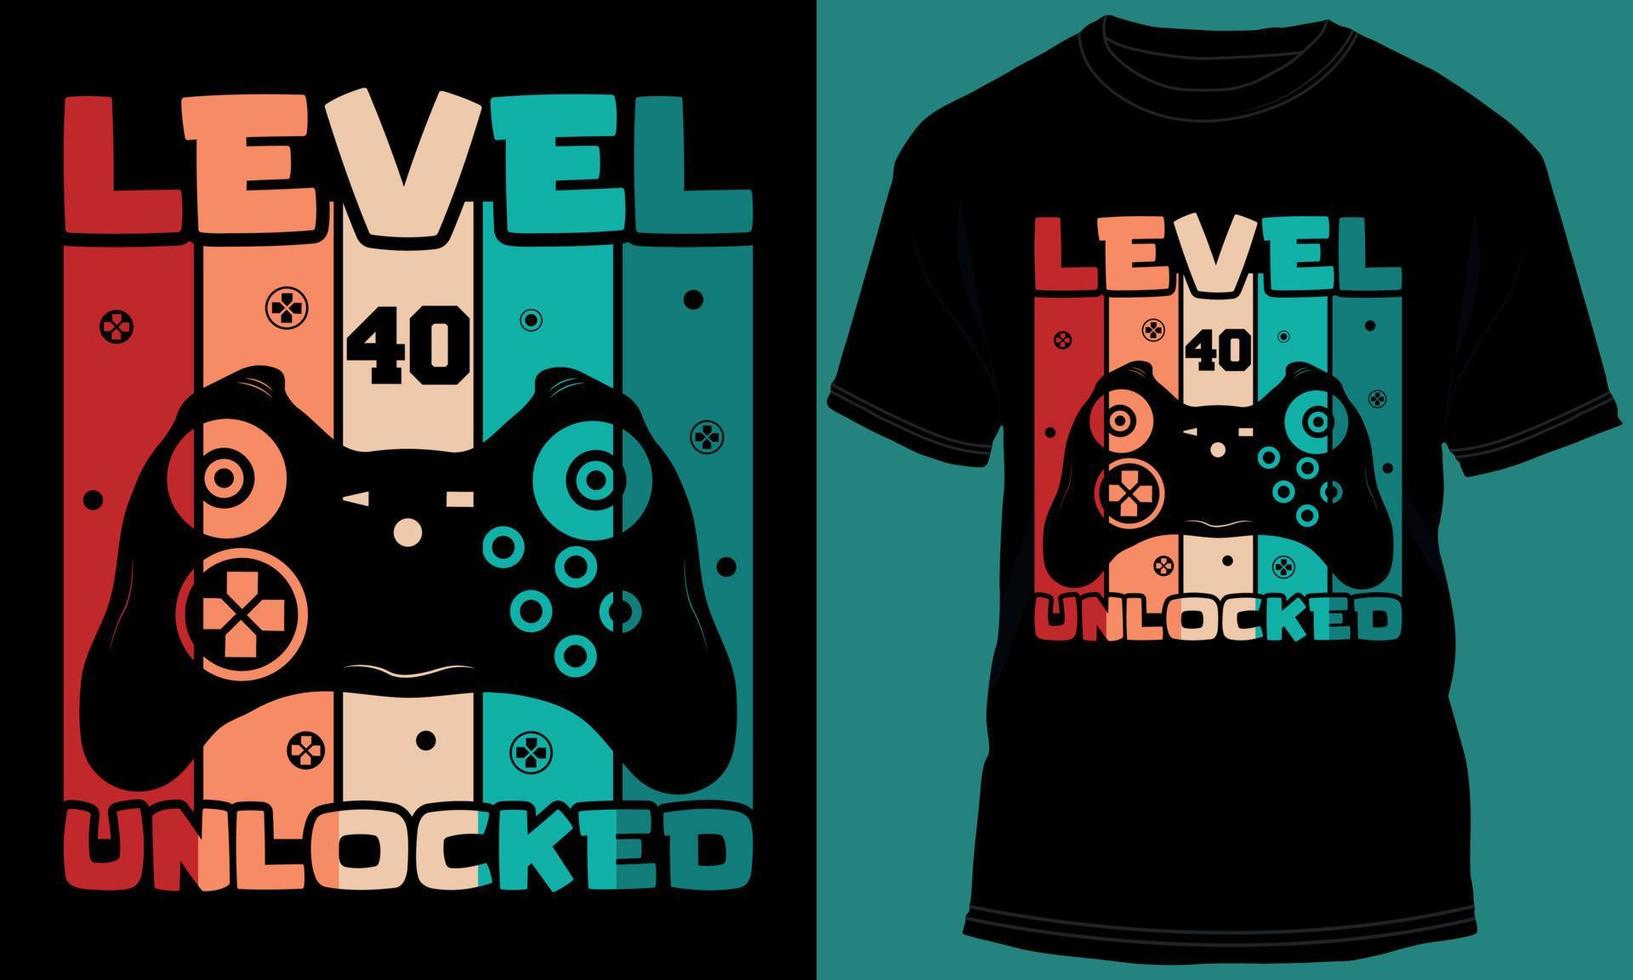 Spieler oder Spielen Niveau 40 freigeschaltet T-Shirt Design vektor